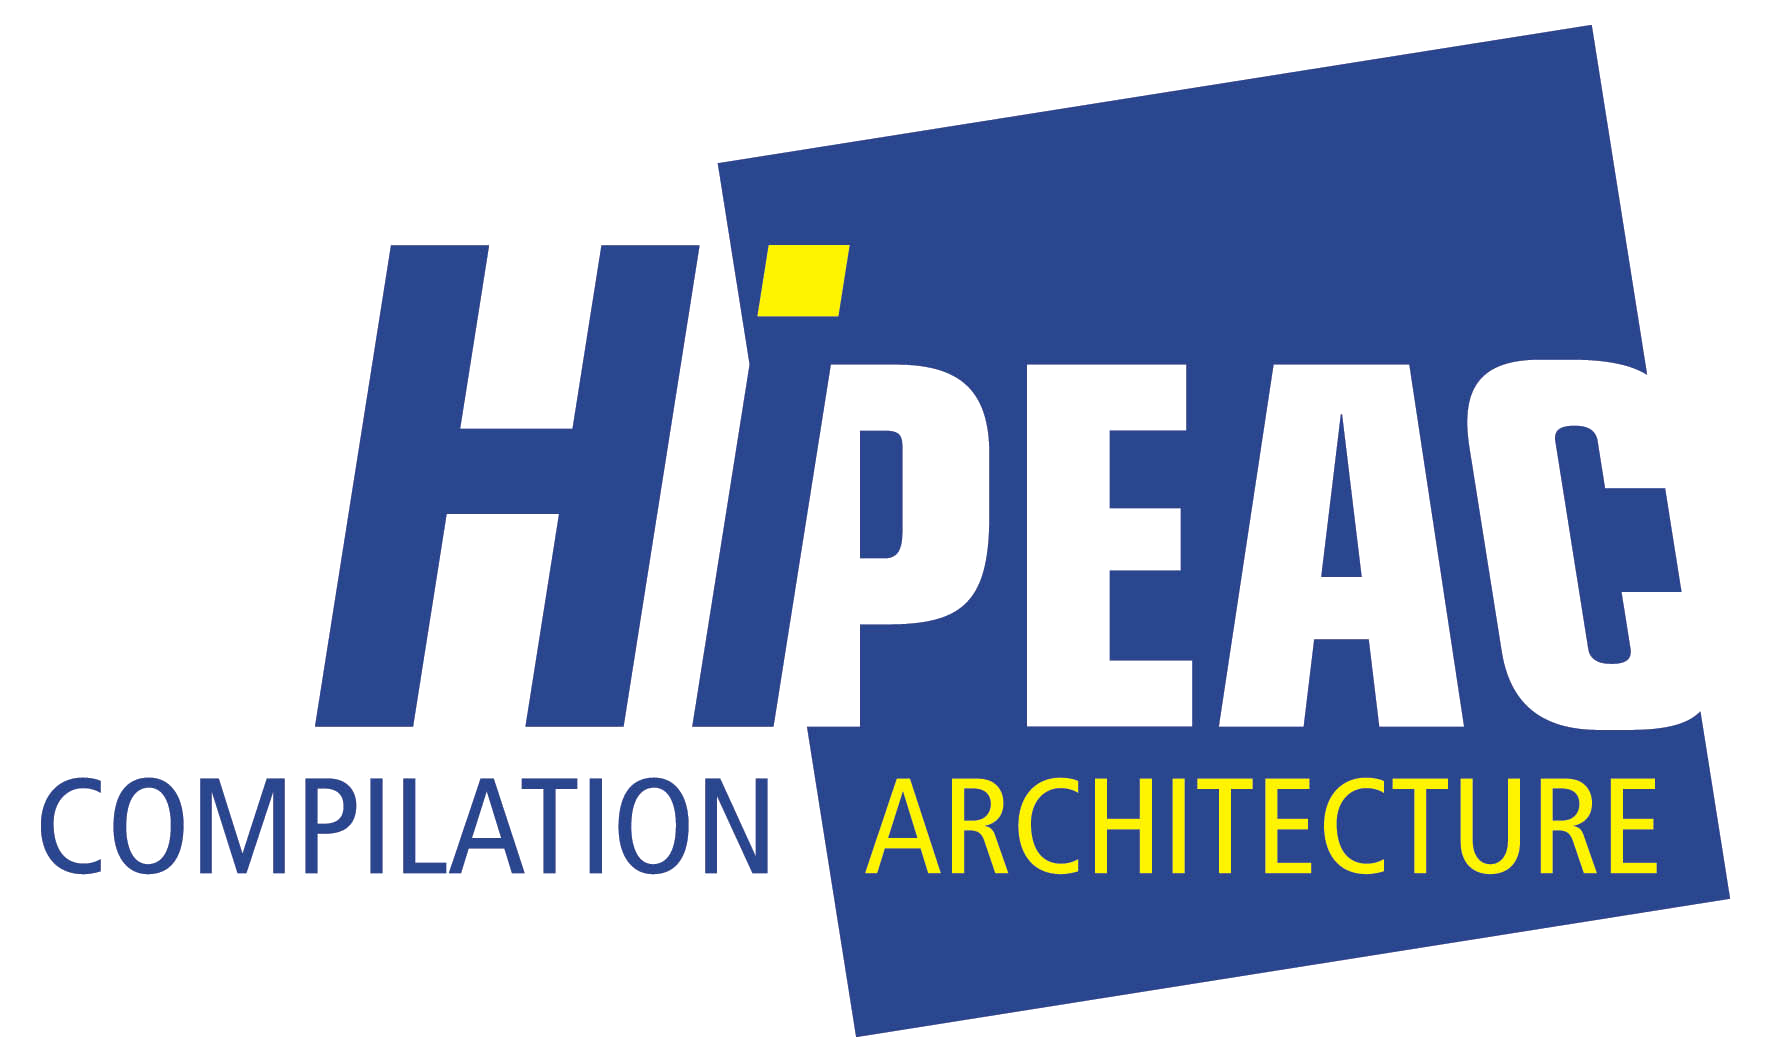 HiPEAC 2016